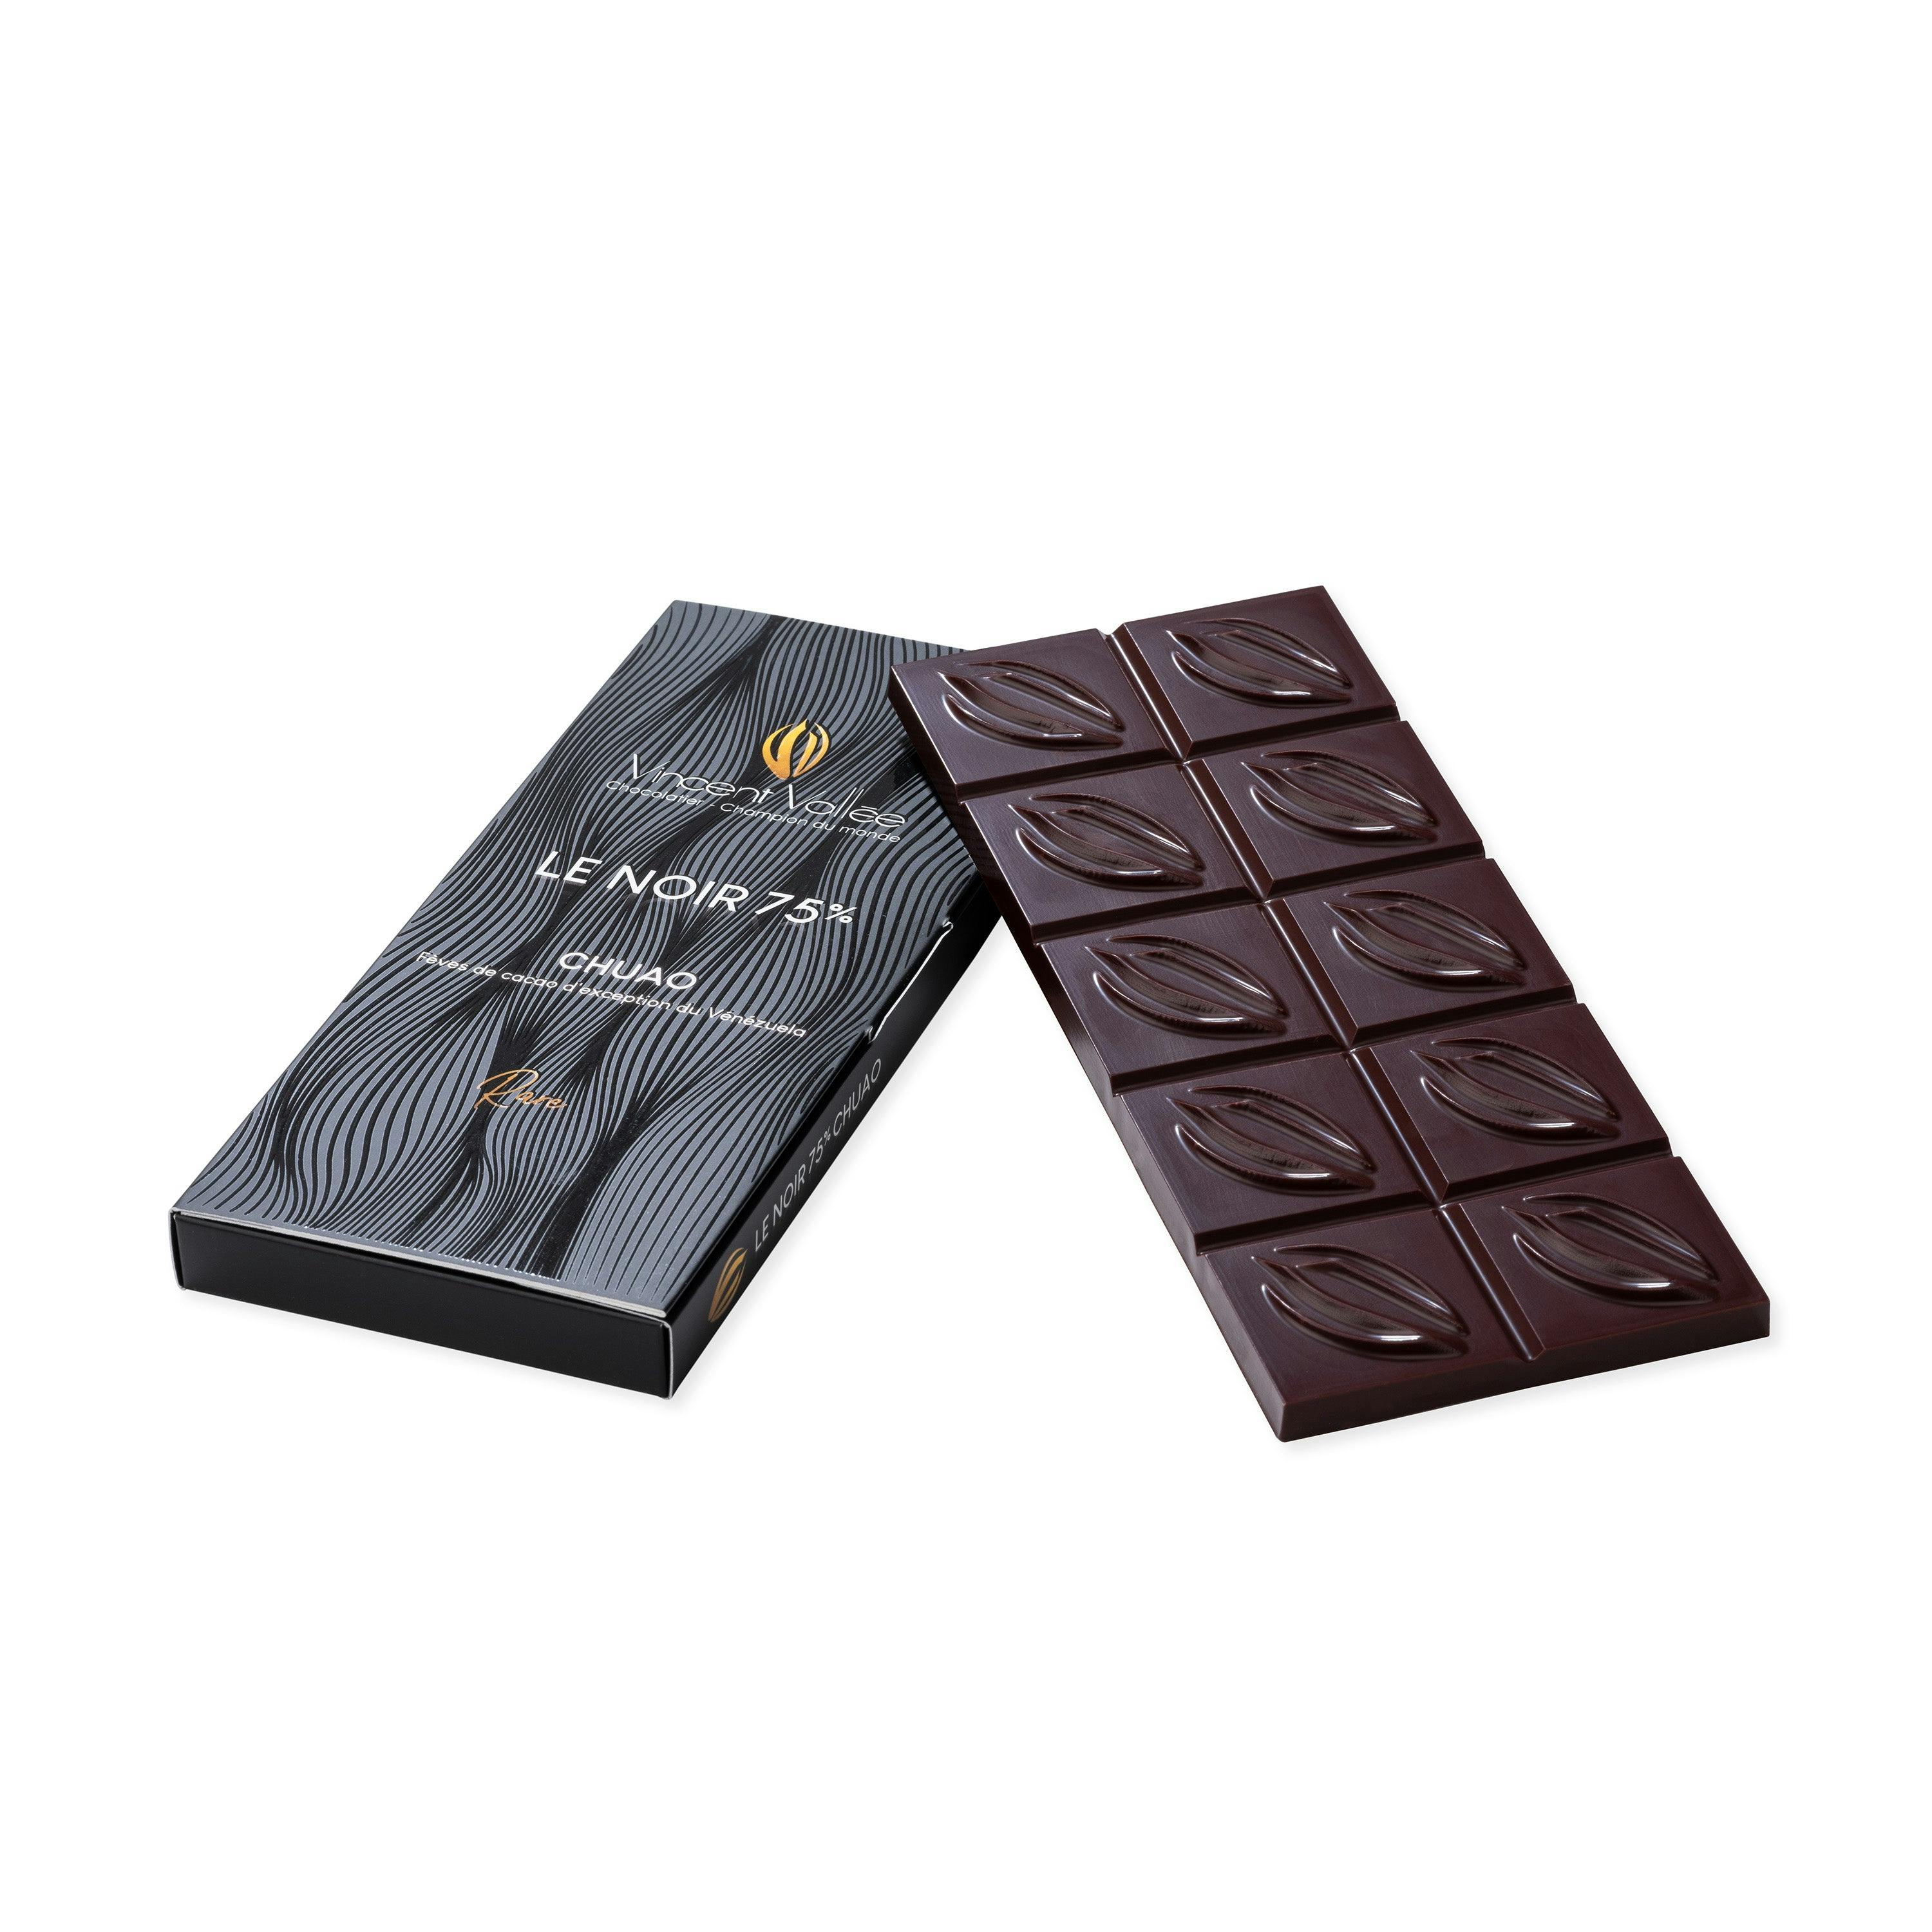 Chuao 75% - Vincent Vallée world champion chocolatier